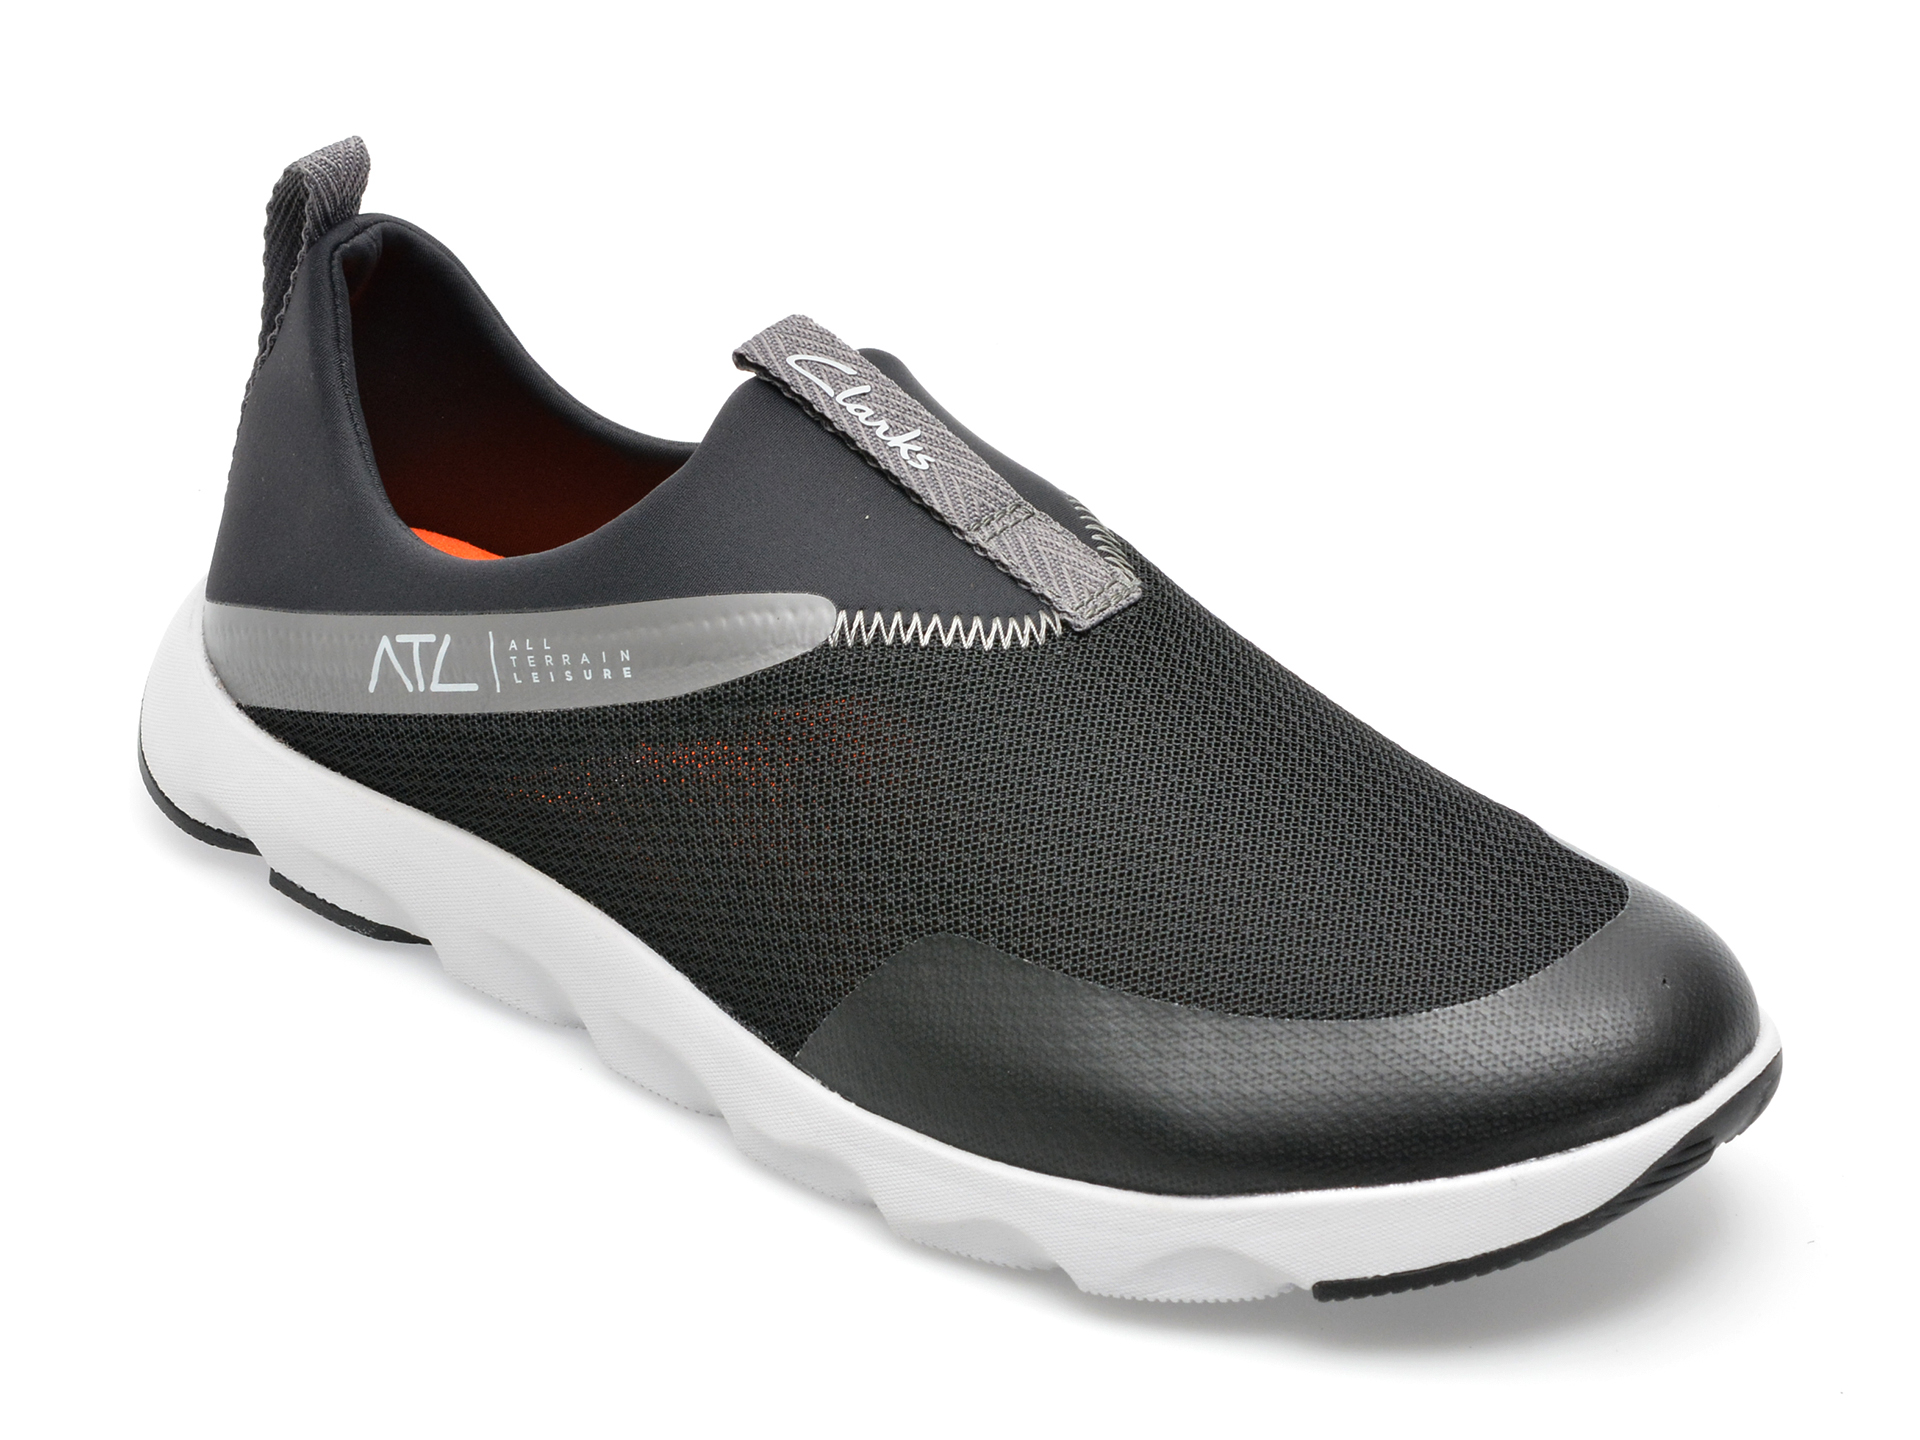 Pantofi CLARKS negri, ATL COAST MOC 01-T, din material textil /barbati/pantofi